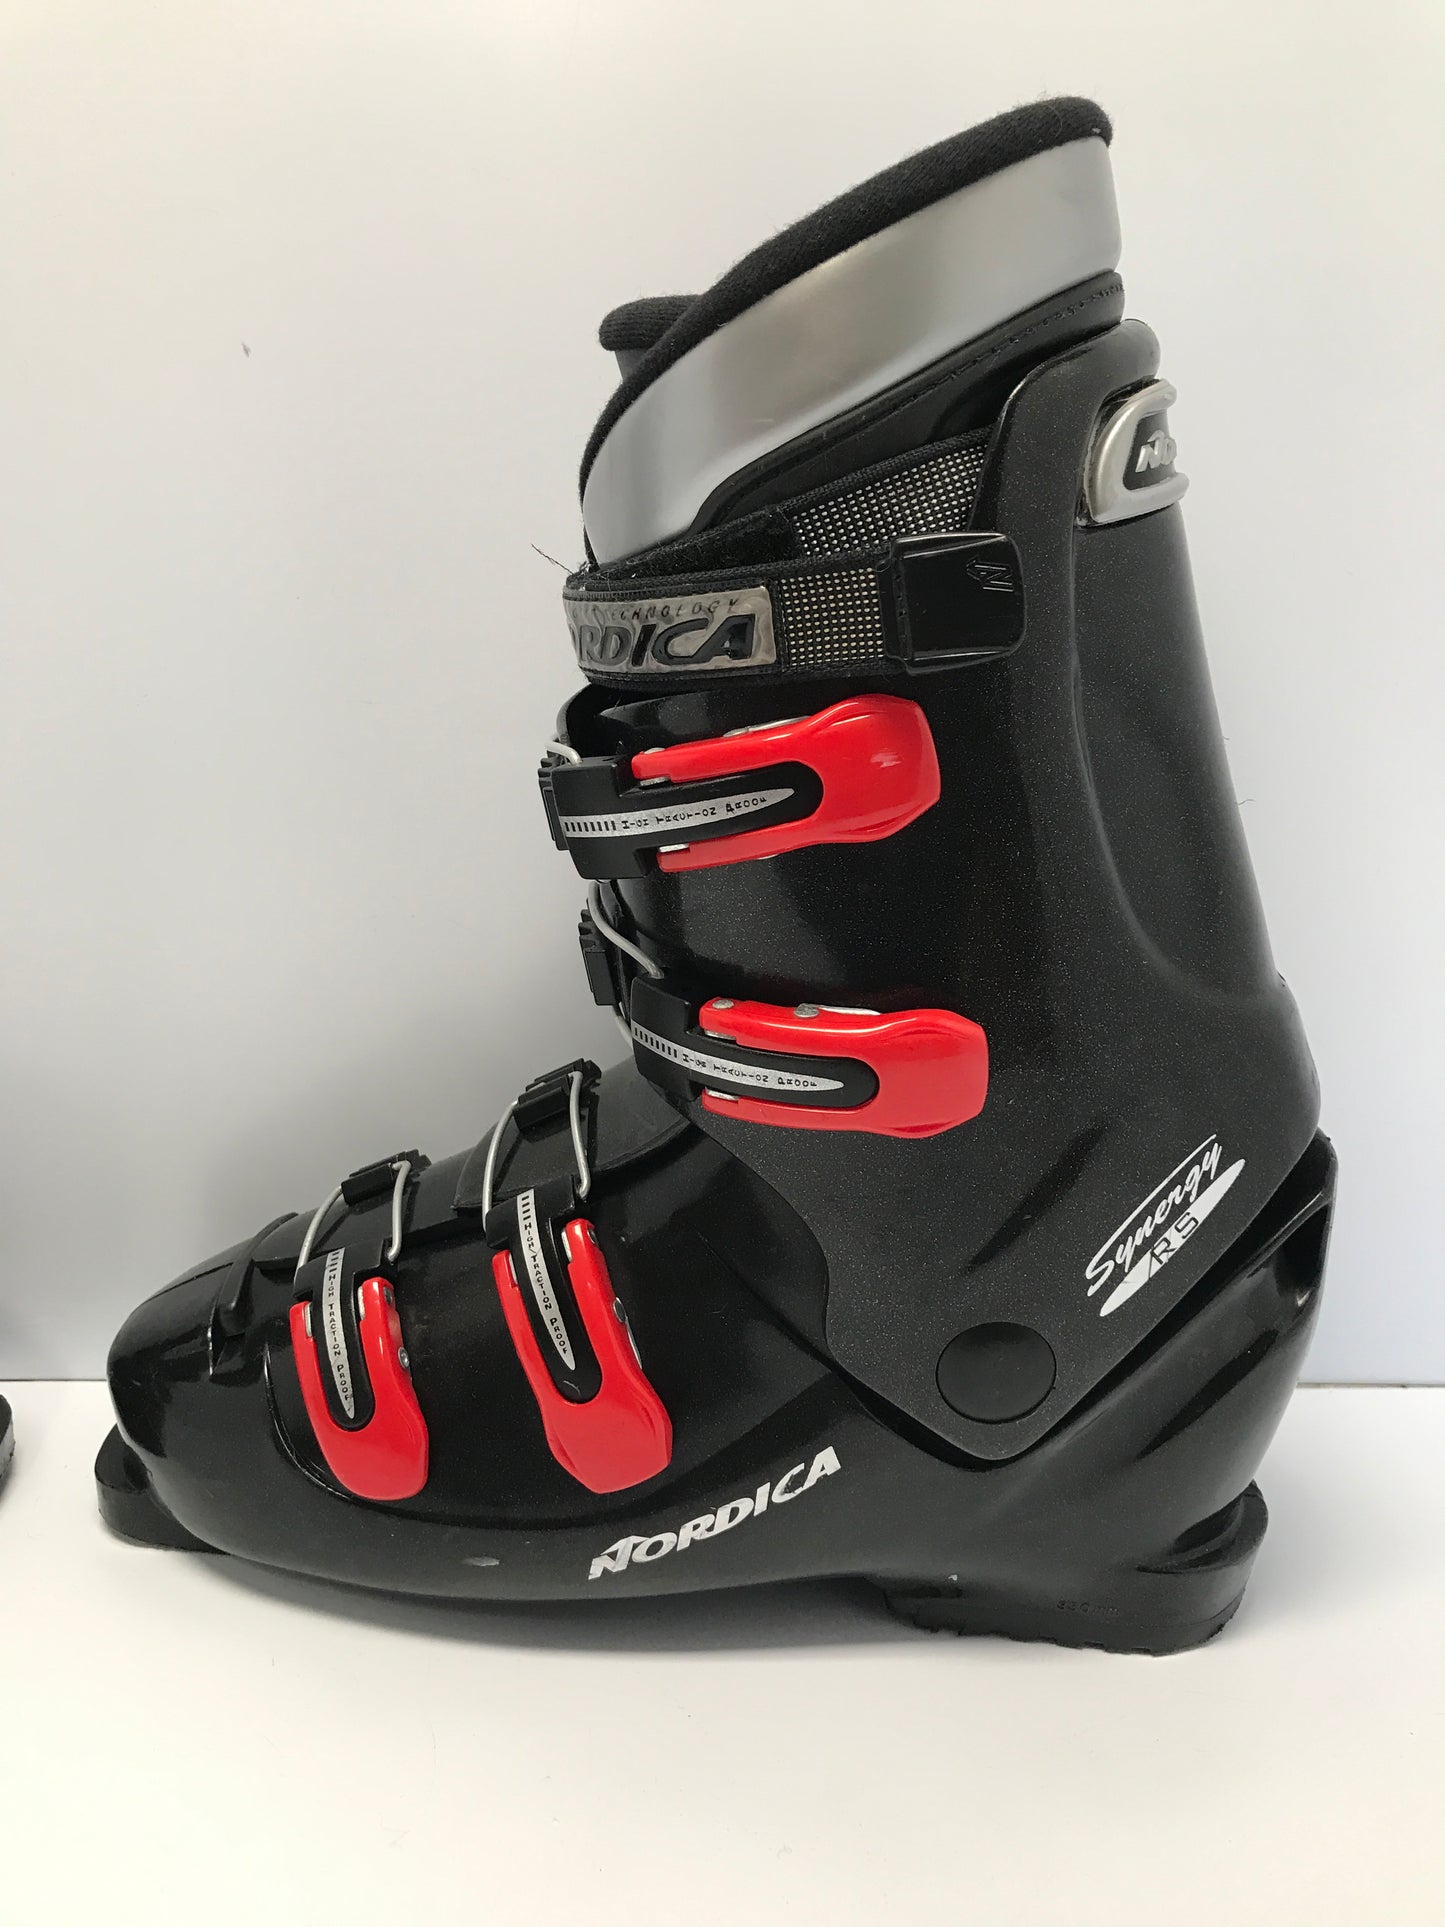 Ski Boots Mondo Size 28.5 Men's Size 10.5 330mm  Nordica Black Red Excellent